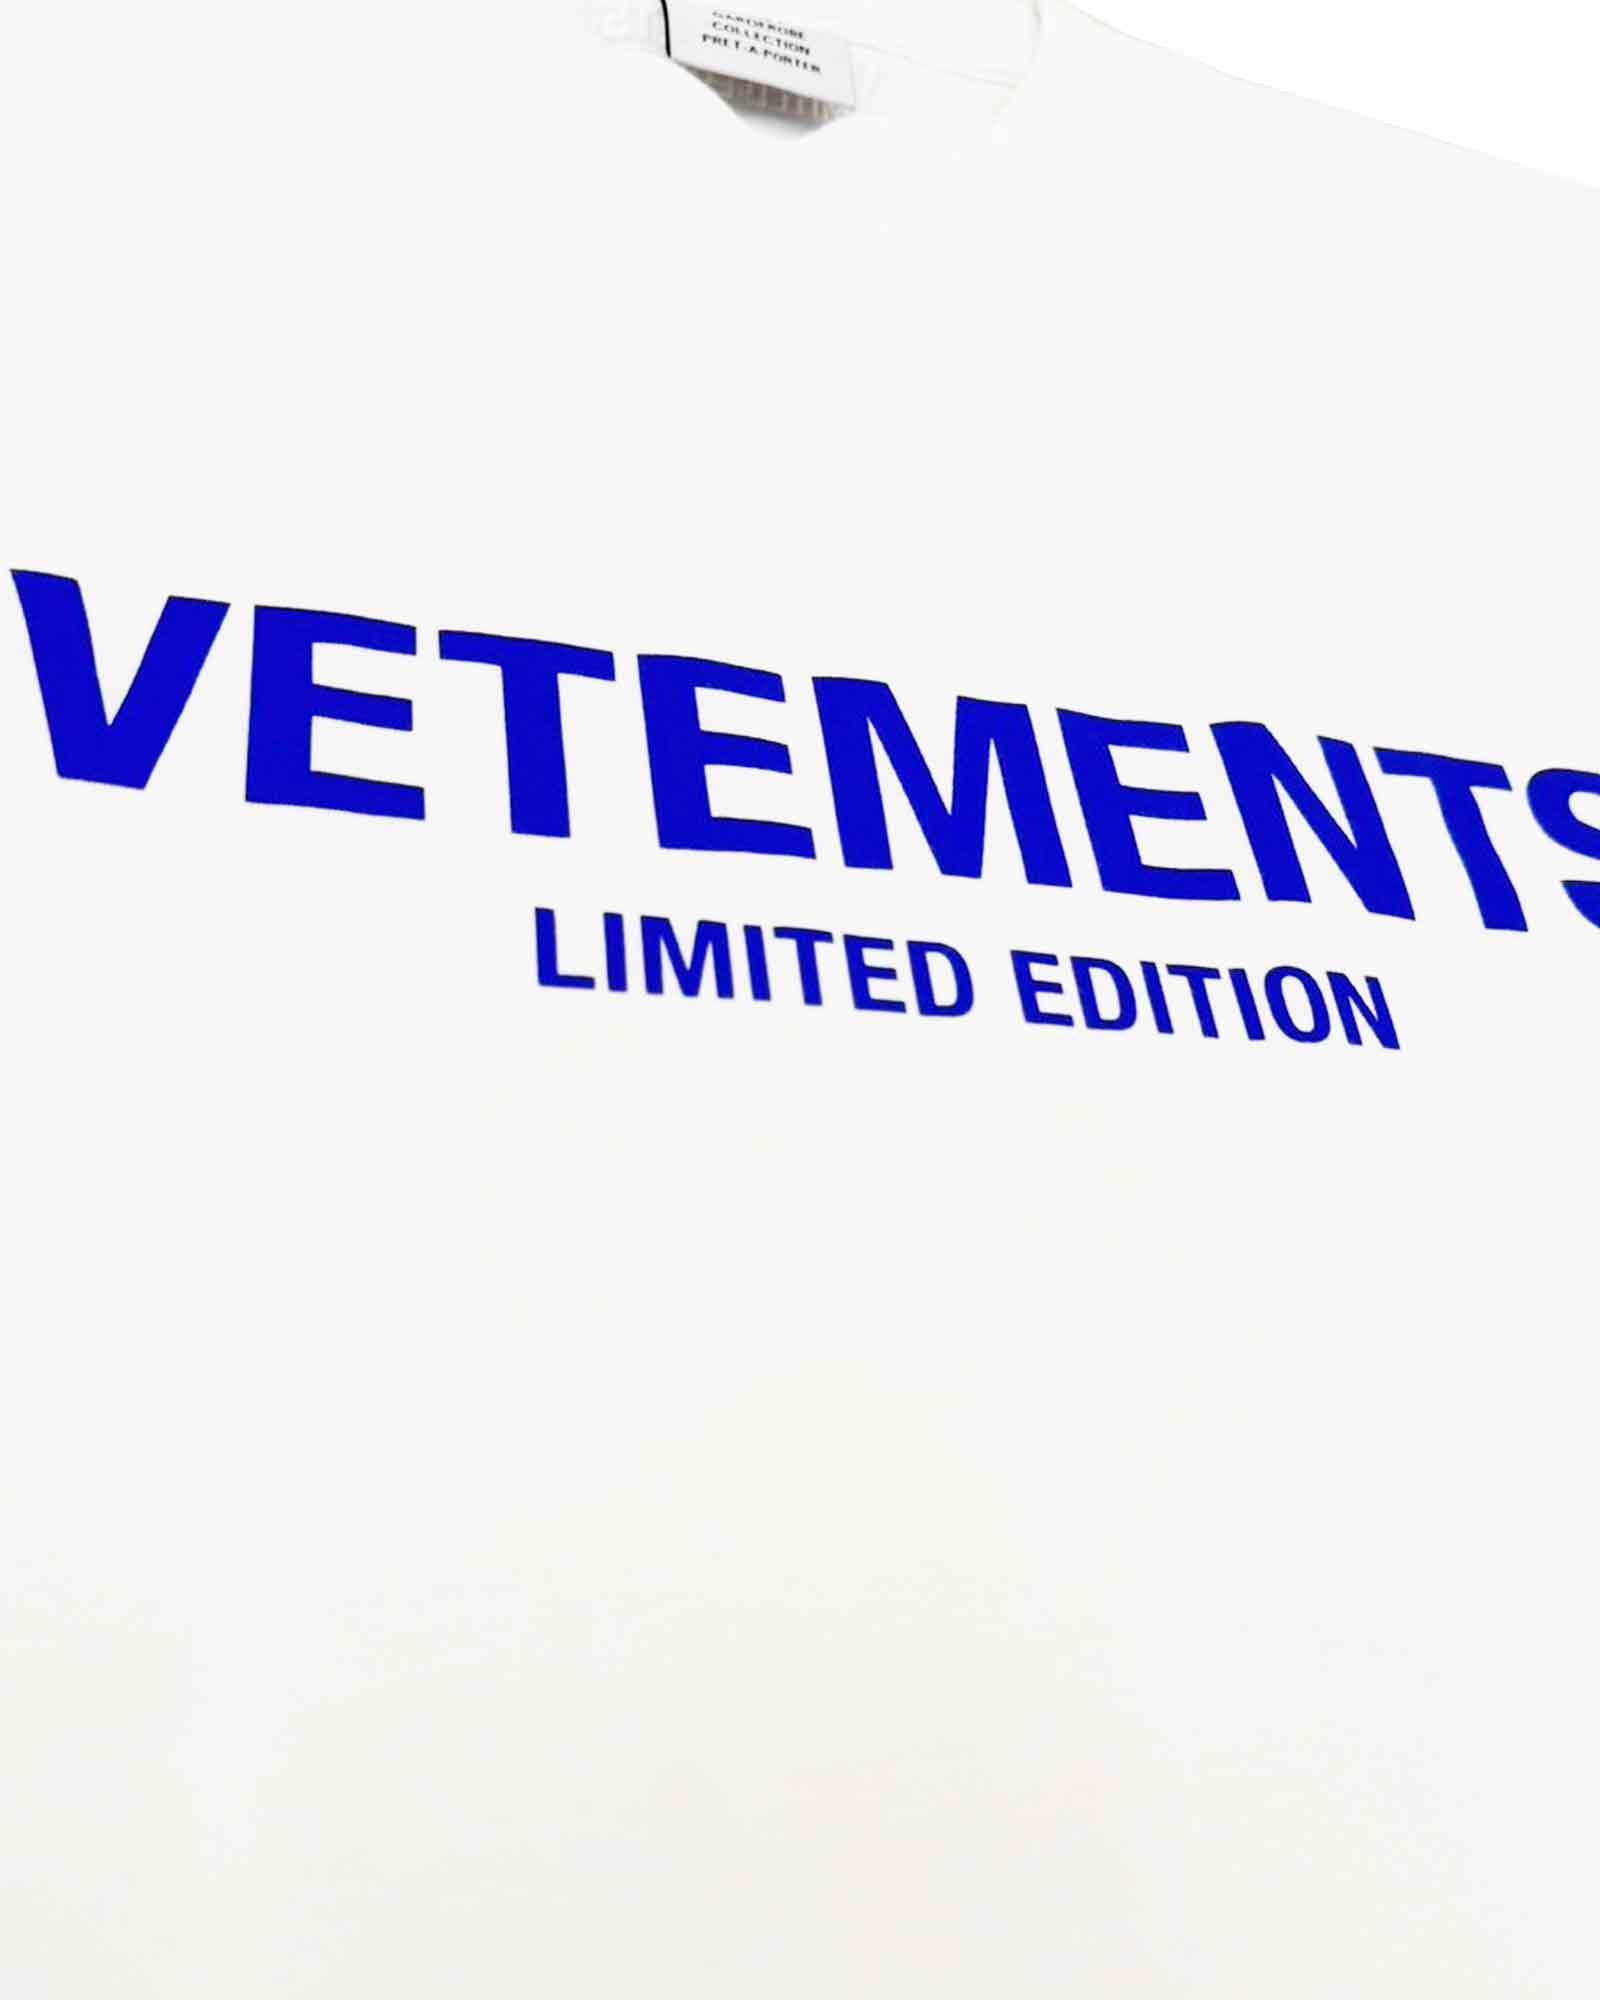 VETEMENTS - ヴェトモン/LIMITED EDITION LOGO T-SHIRT/ロゴTシャツ 